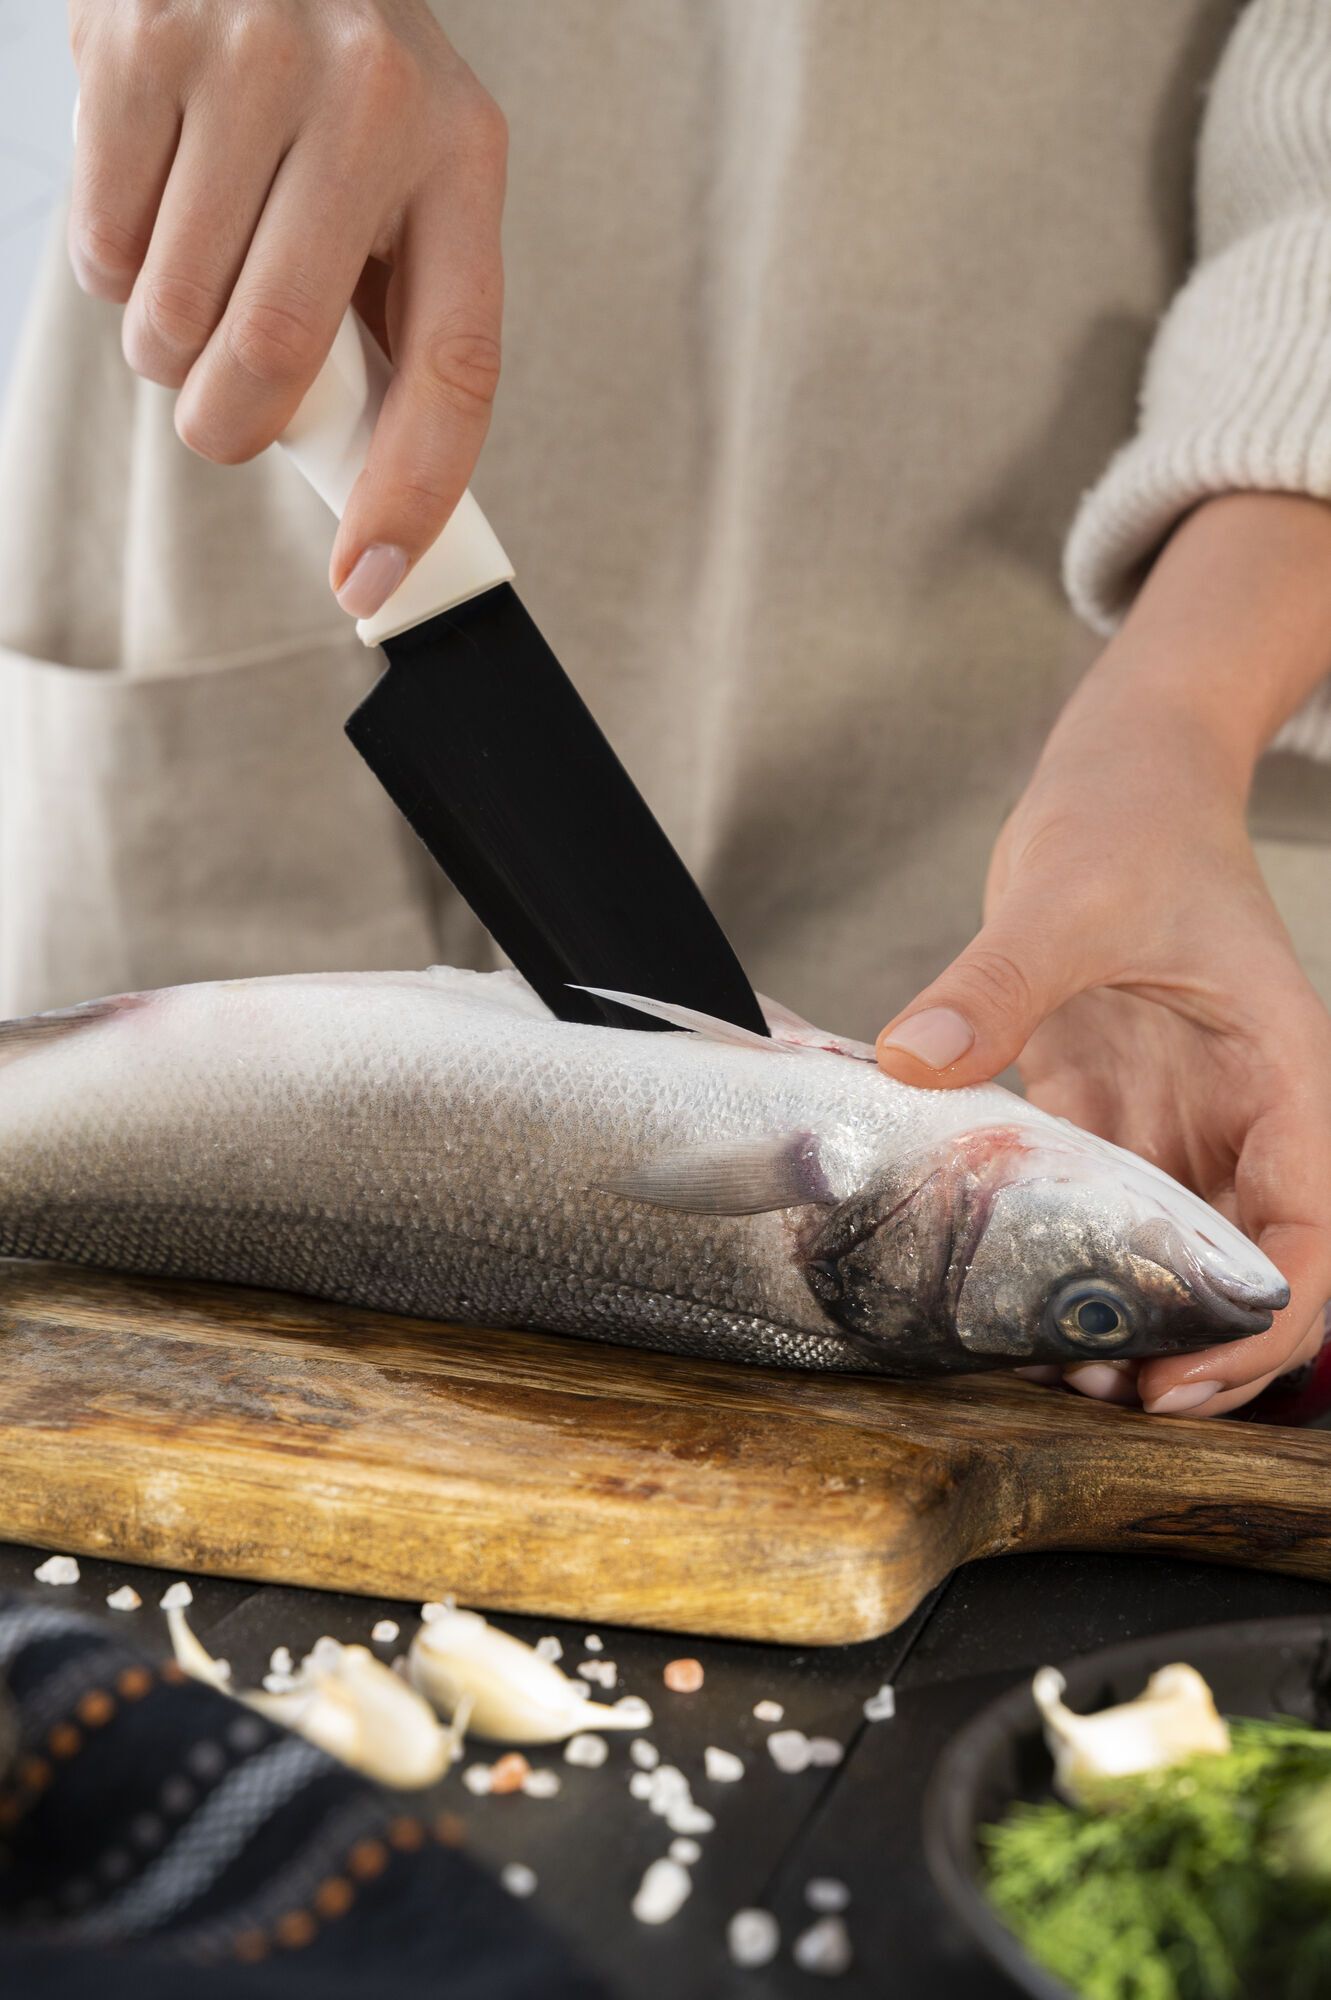 How to clean mackerel easily: useful life hacks